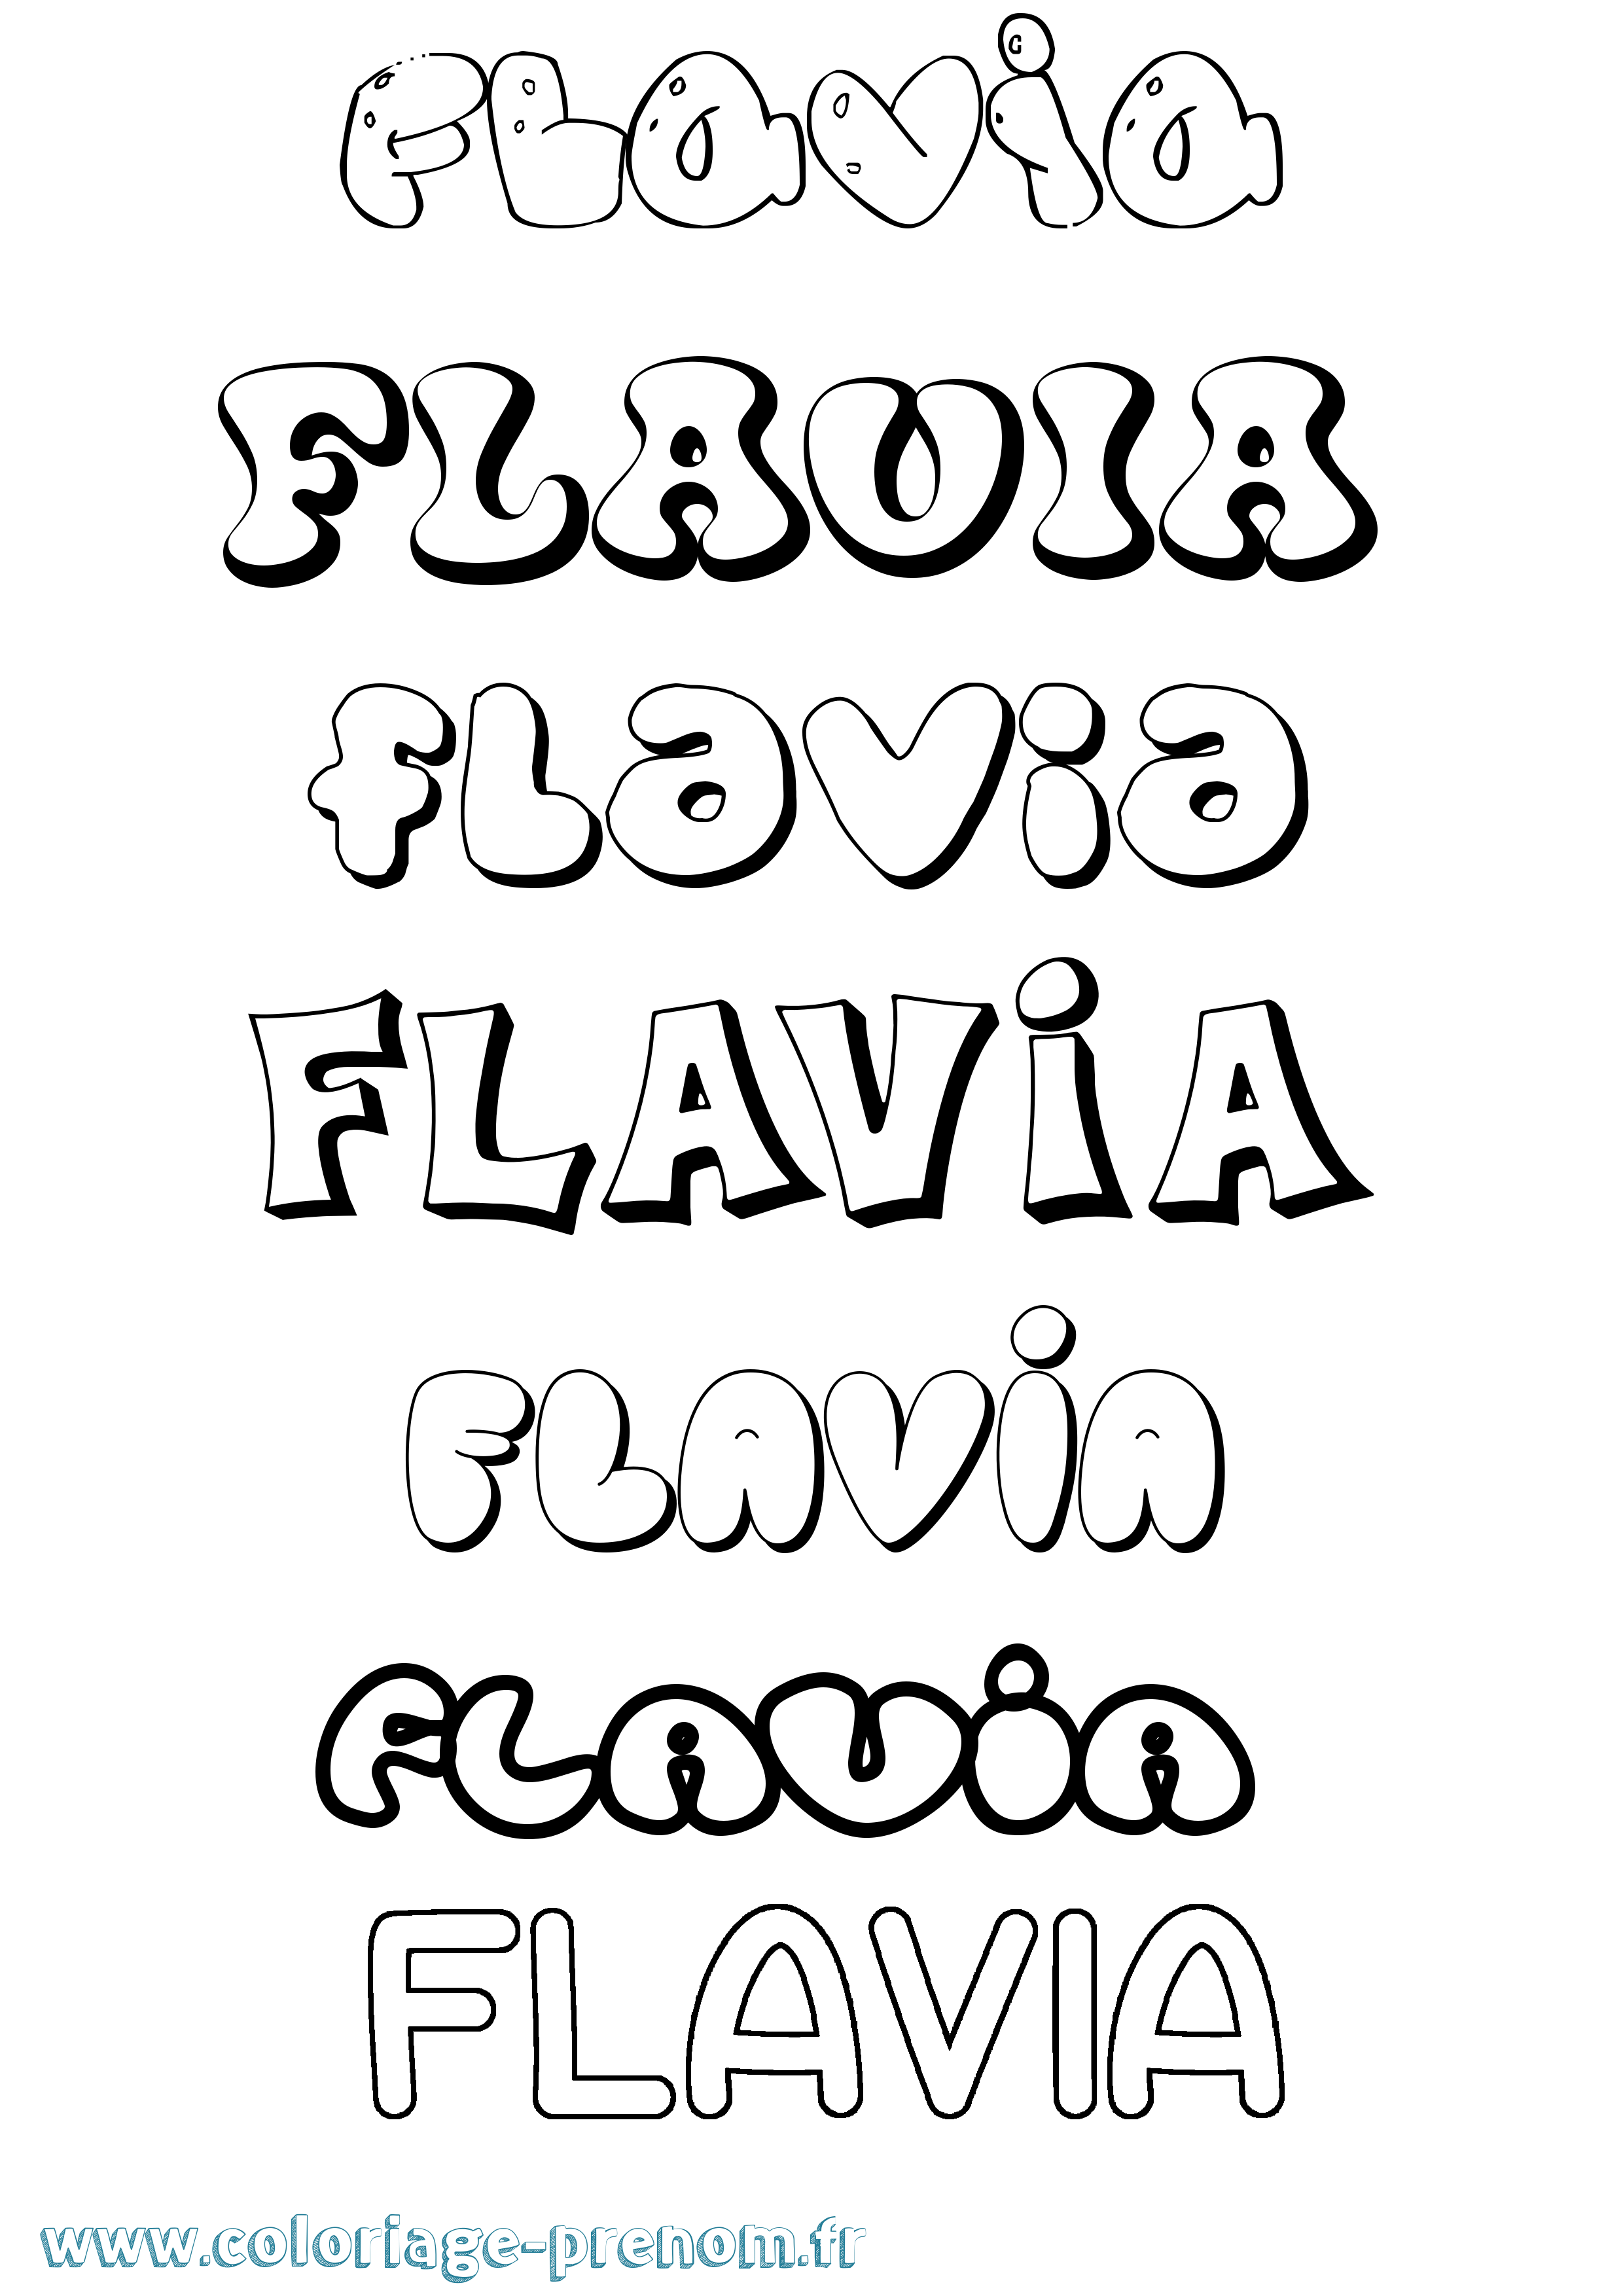 Coloriage prénom Flavia Bubble